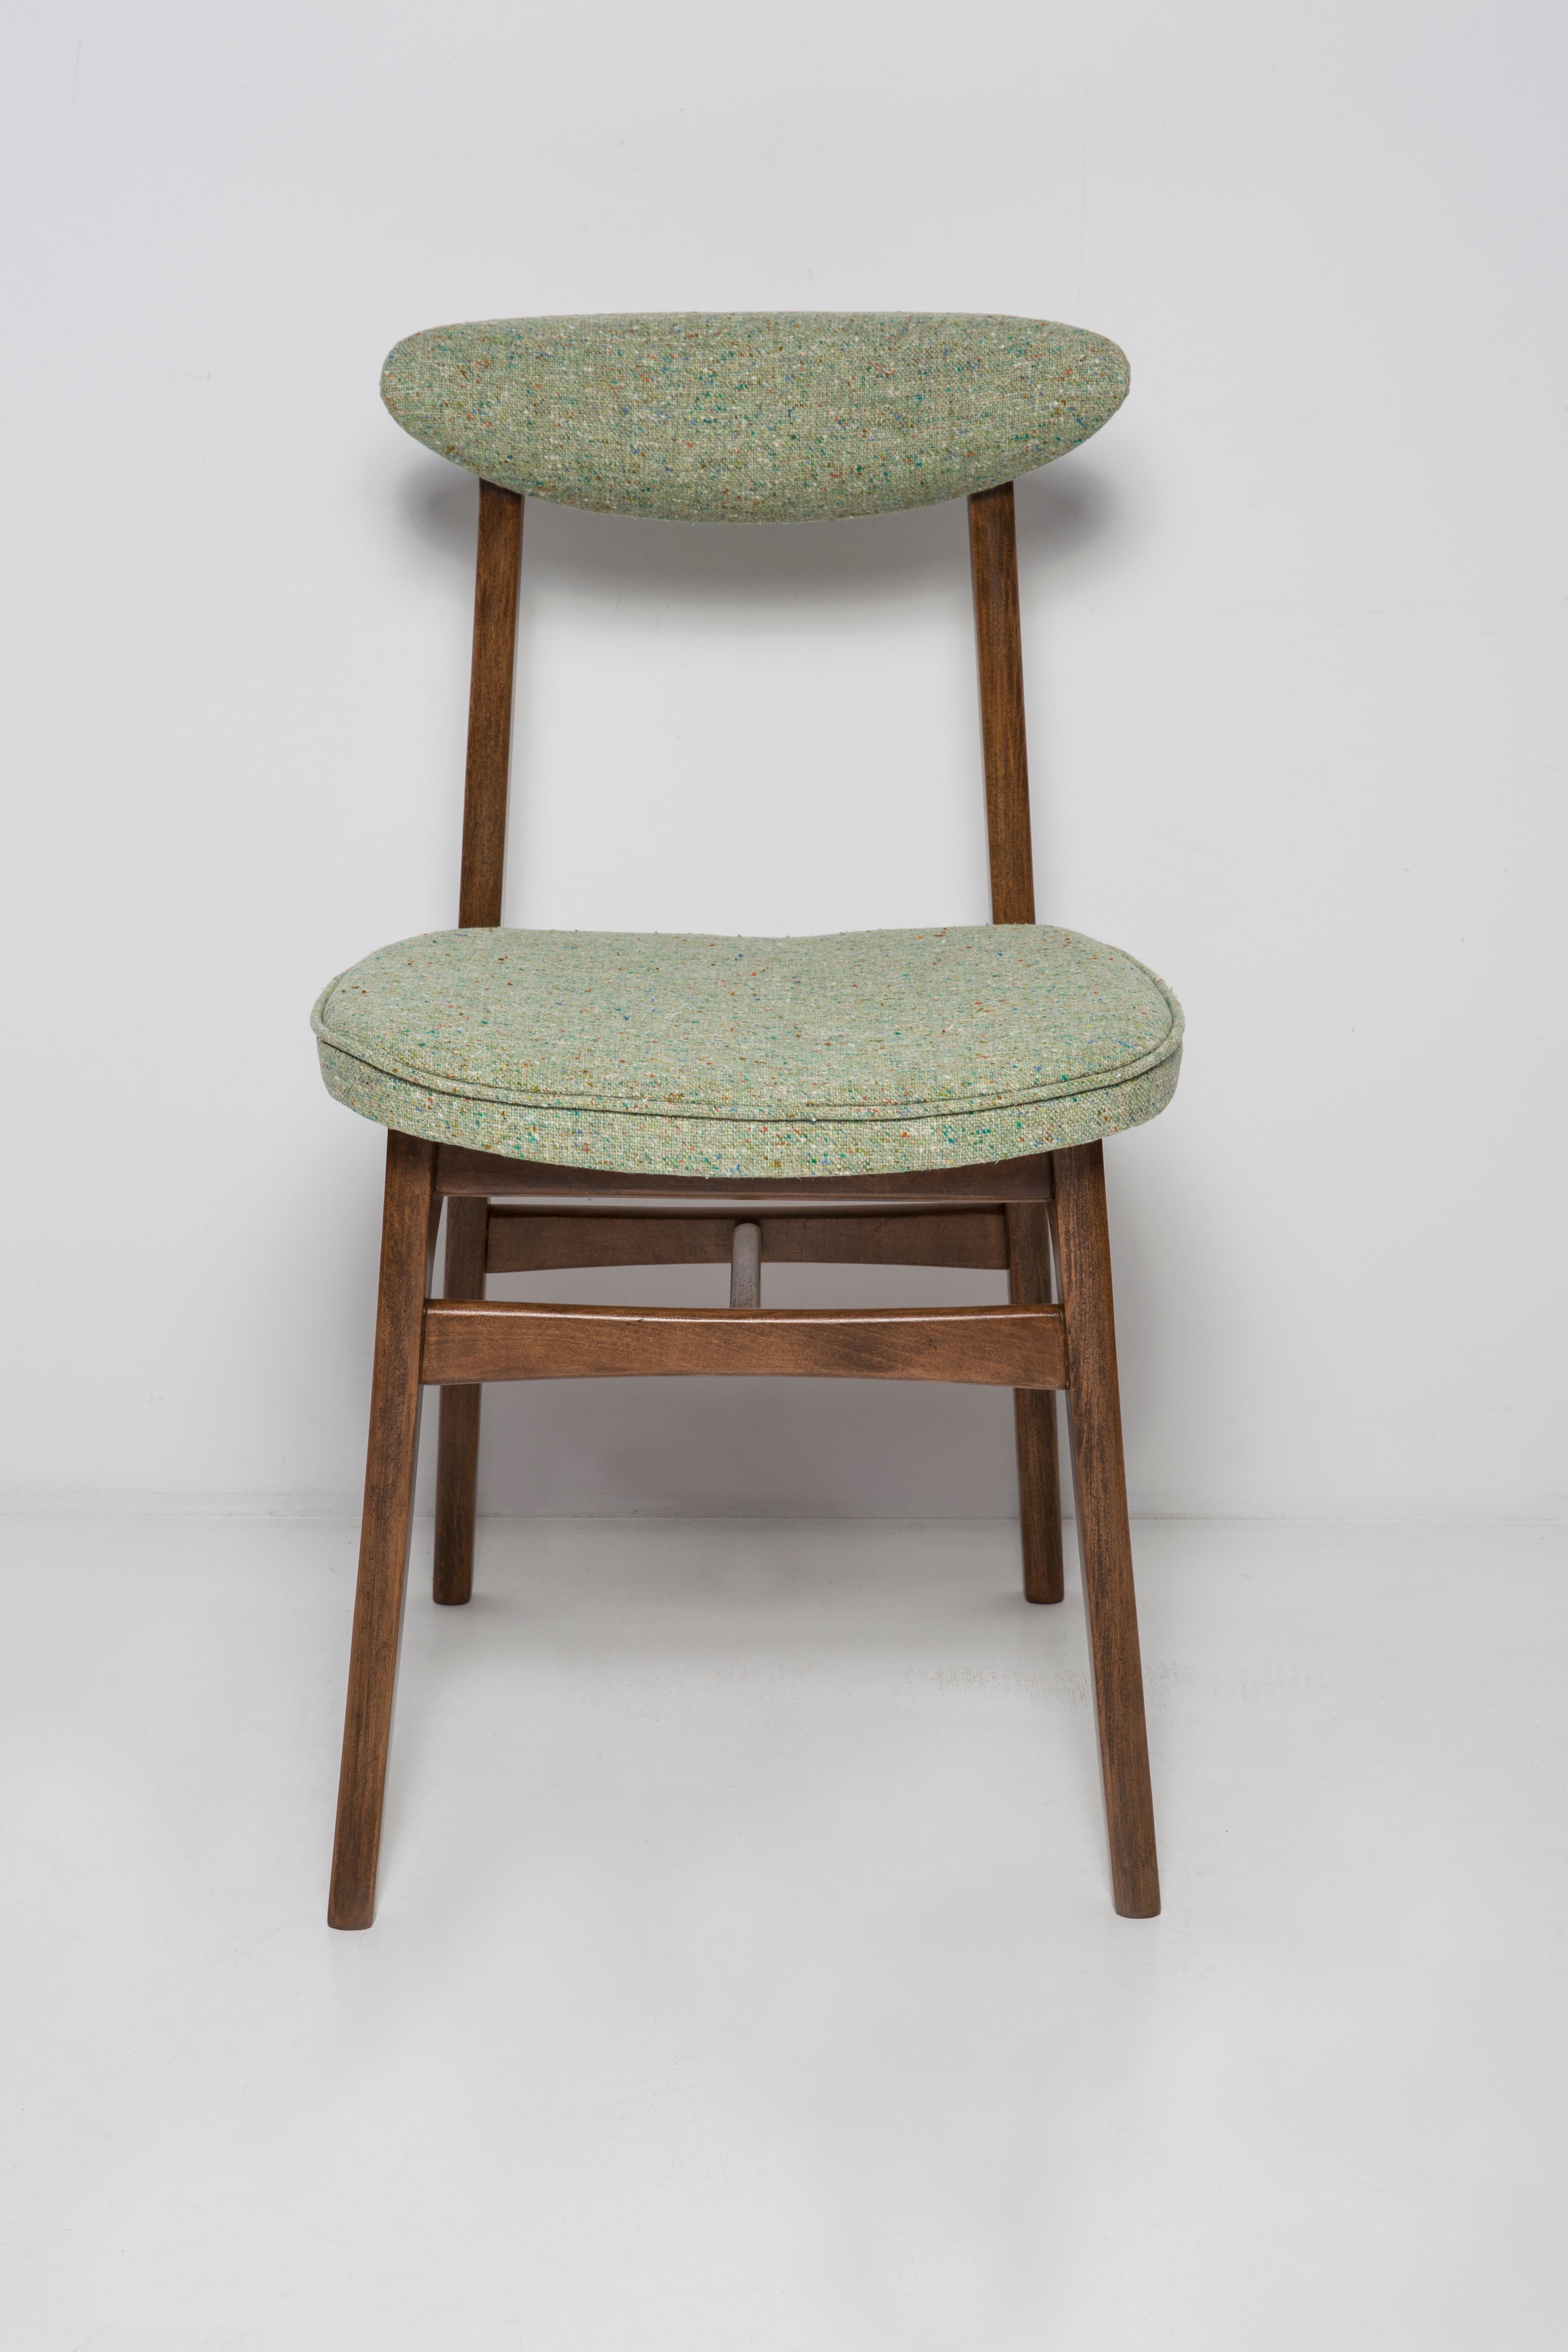 Polish Mid Century Apple Green Wool Chair, Walnut Wood, Rajmund Halas, Poland, 1960s For Sale